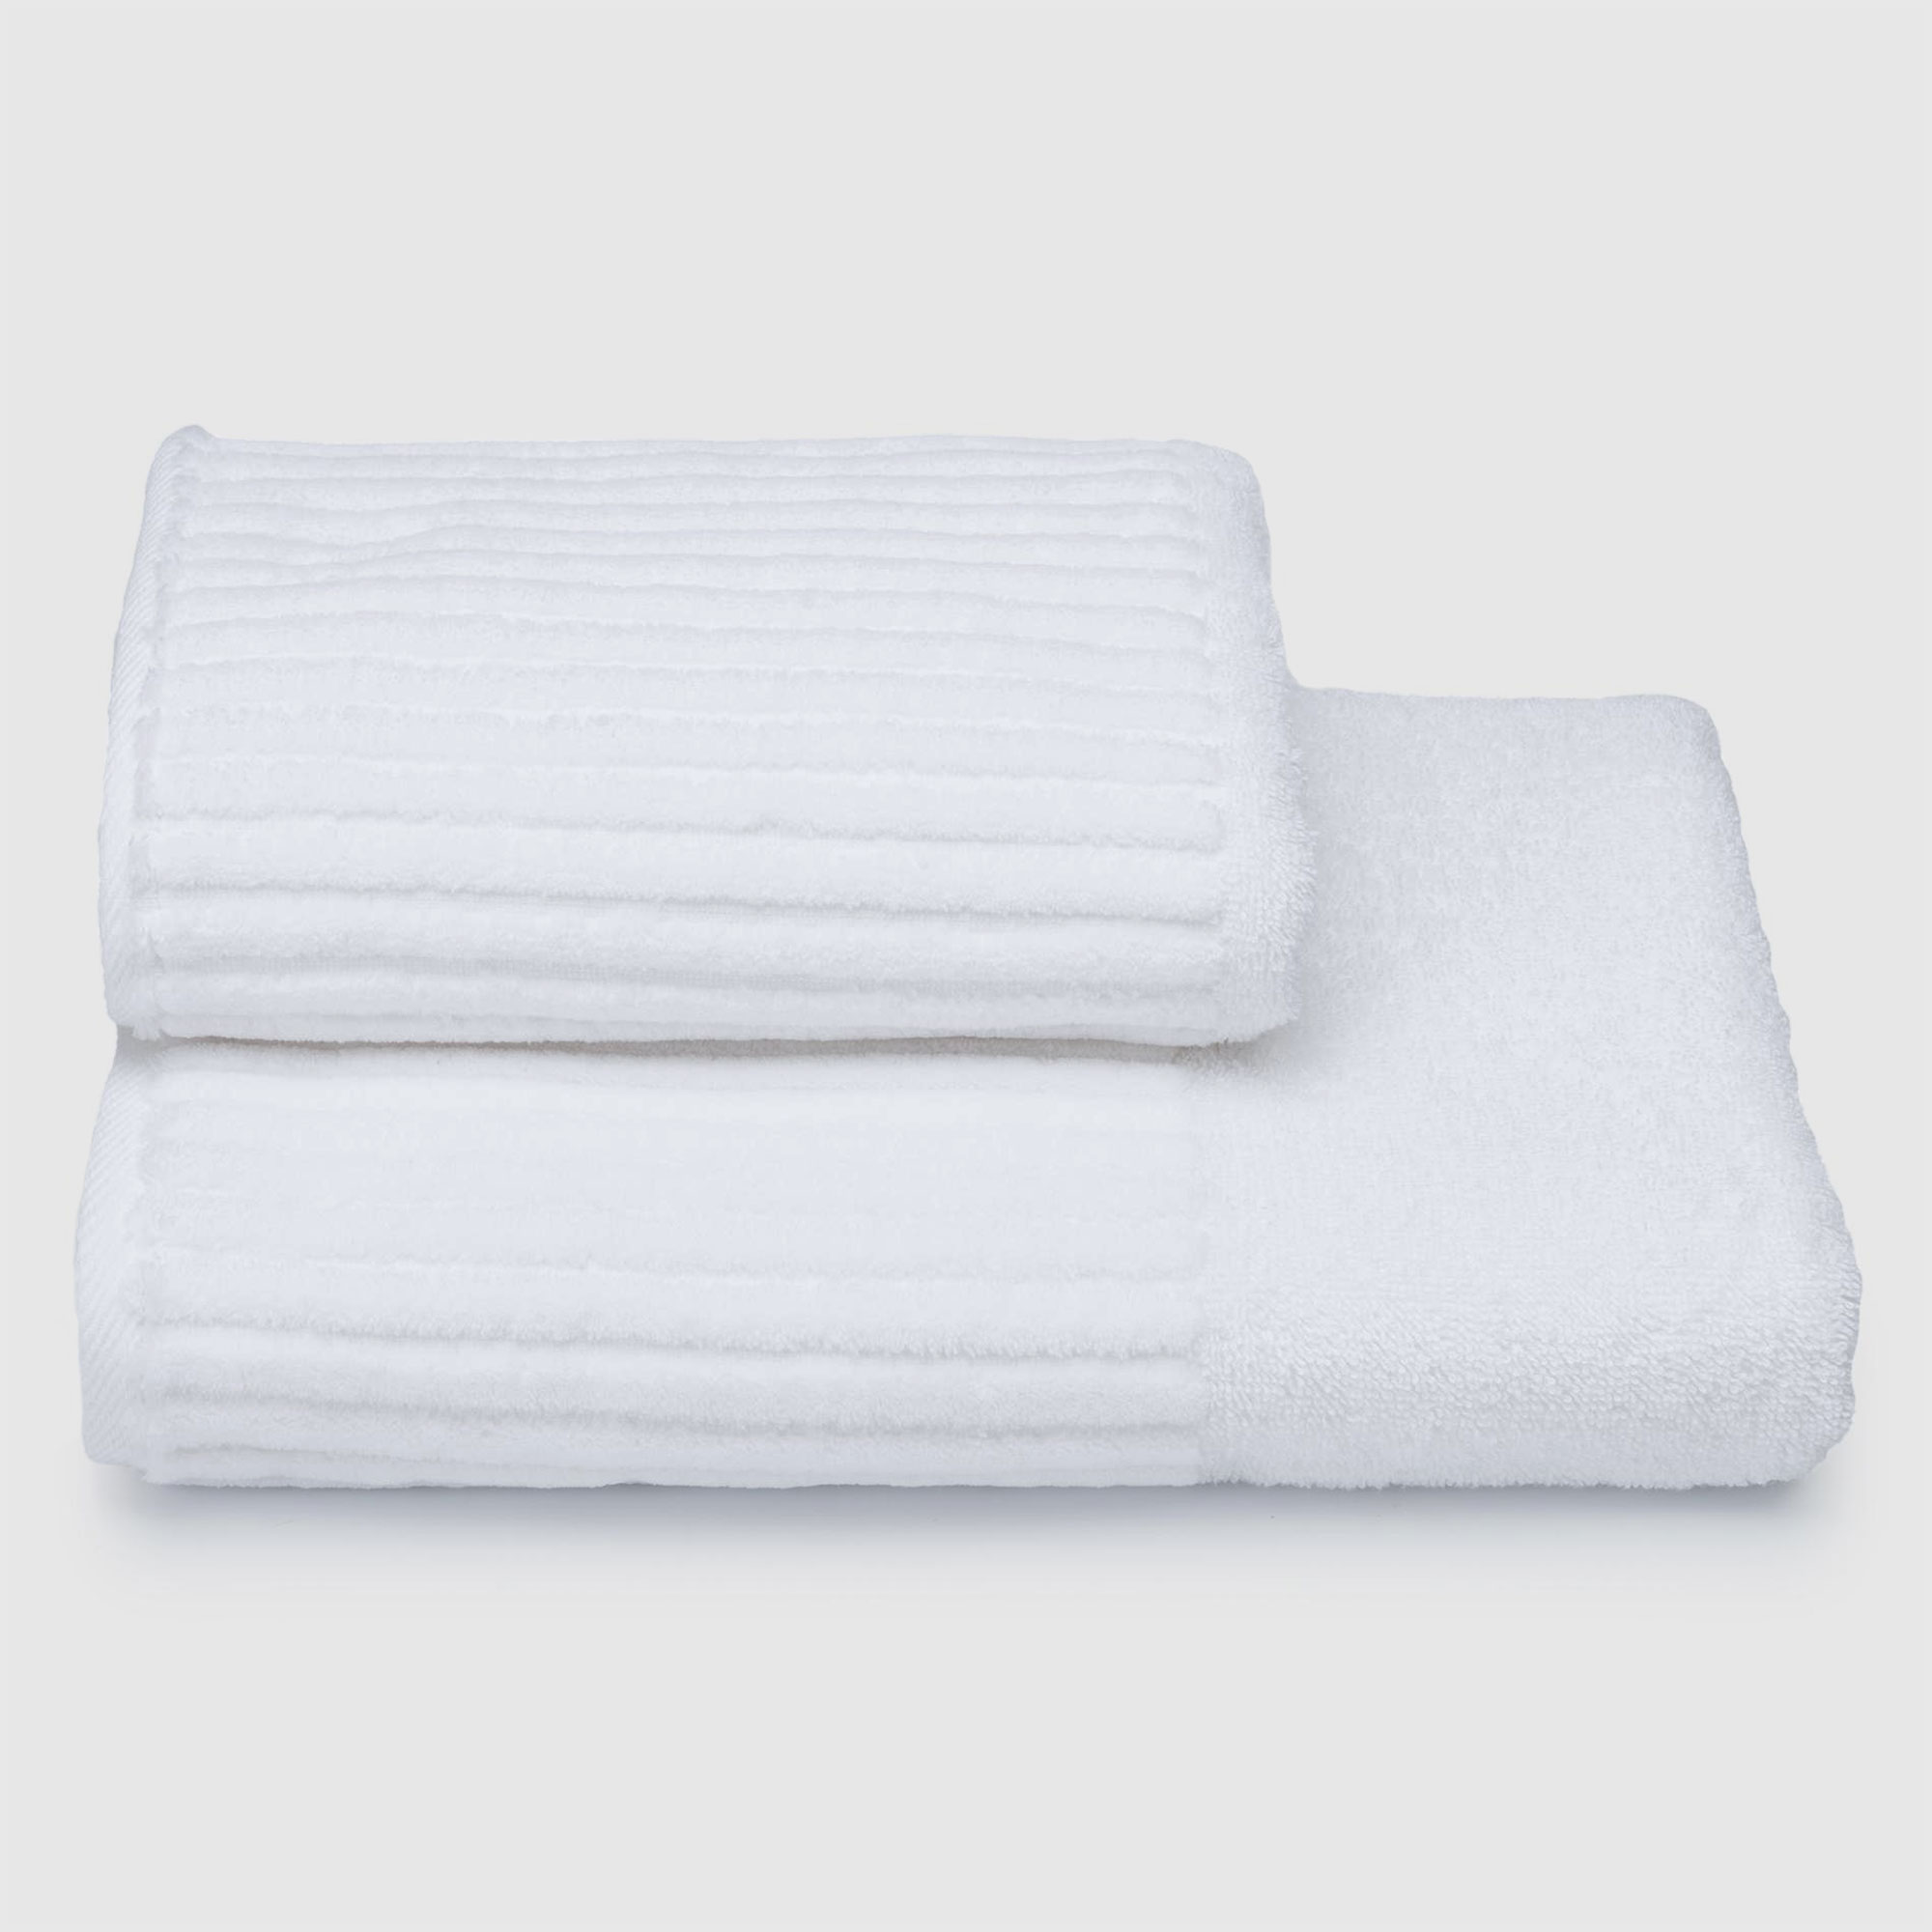 Где купить Махровое полотенце Cleanelly Basic Cascata белое 50х90 см Cleanelly 